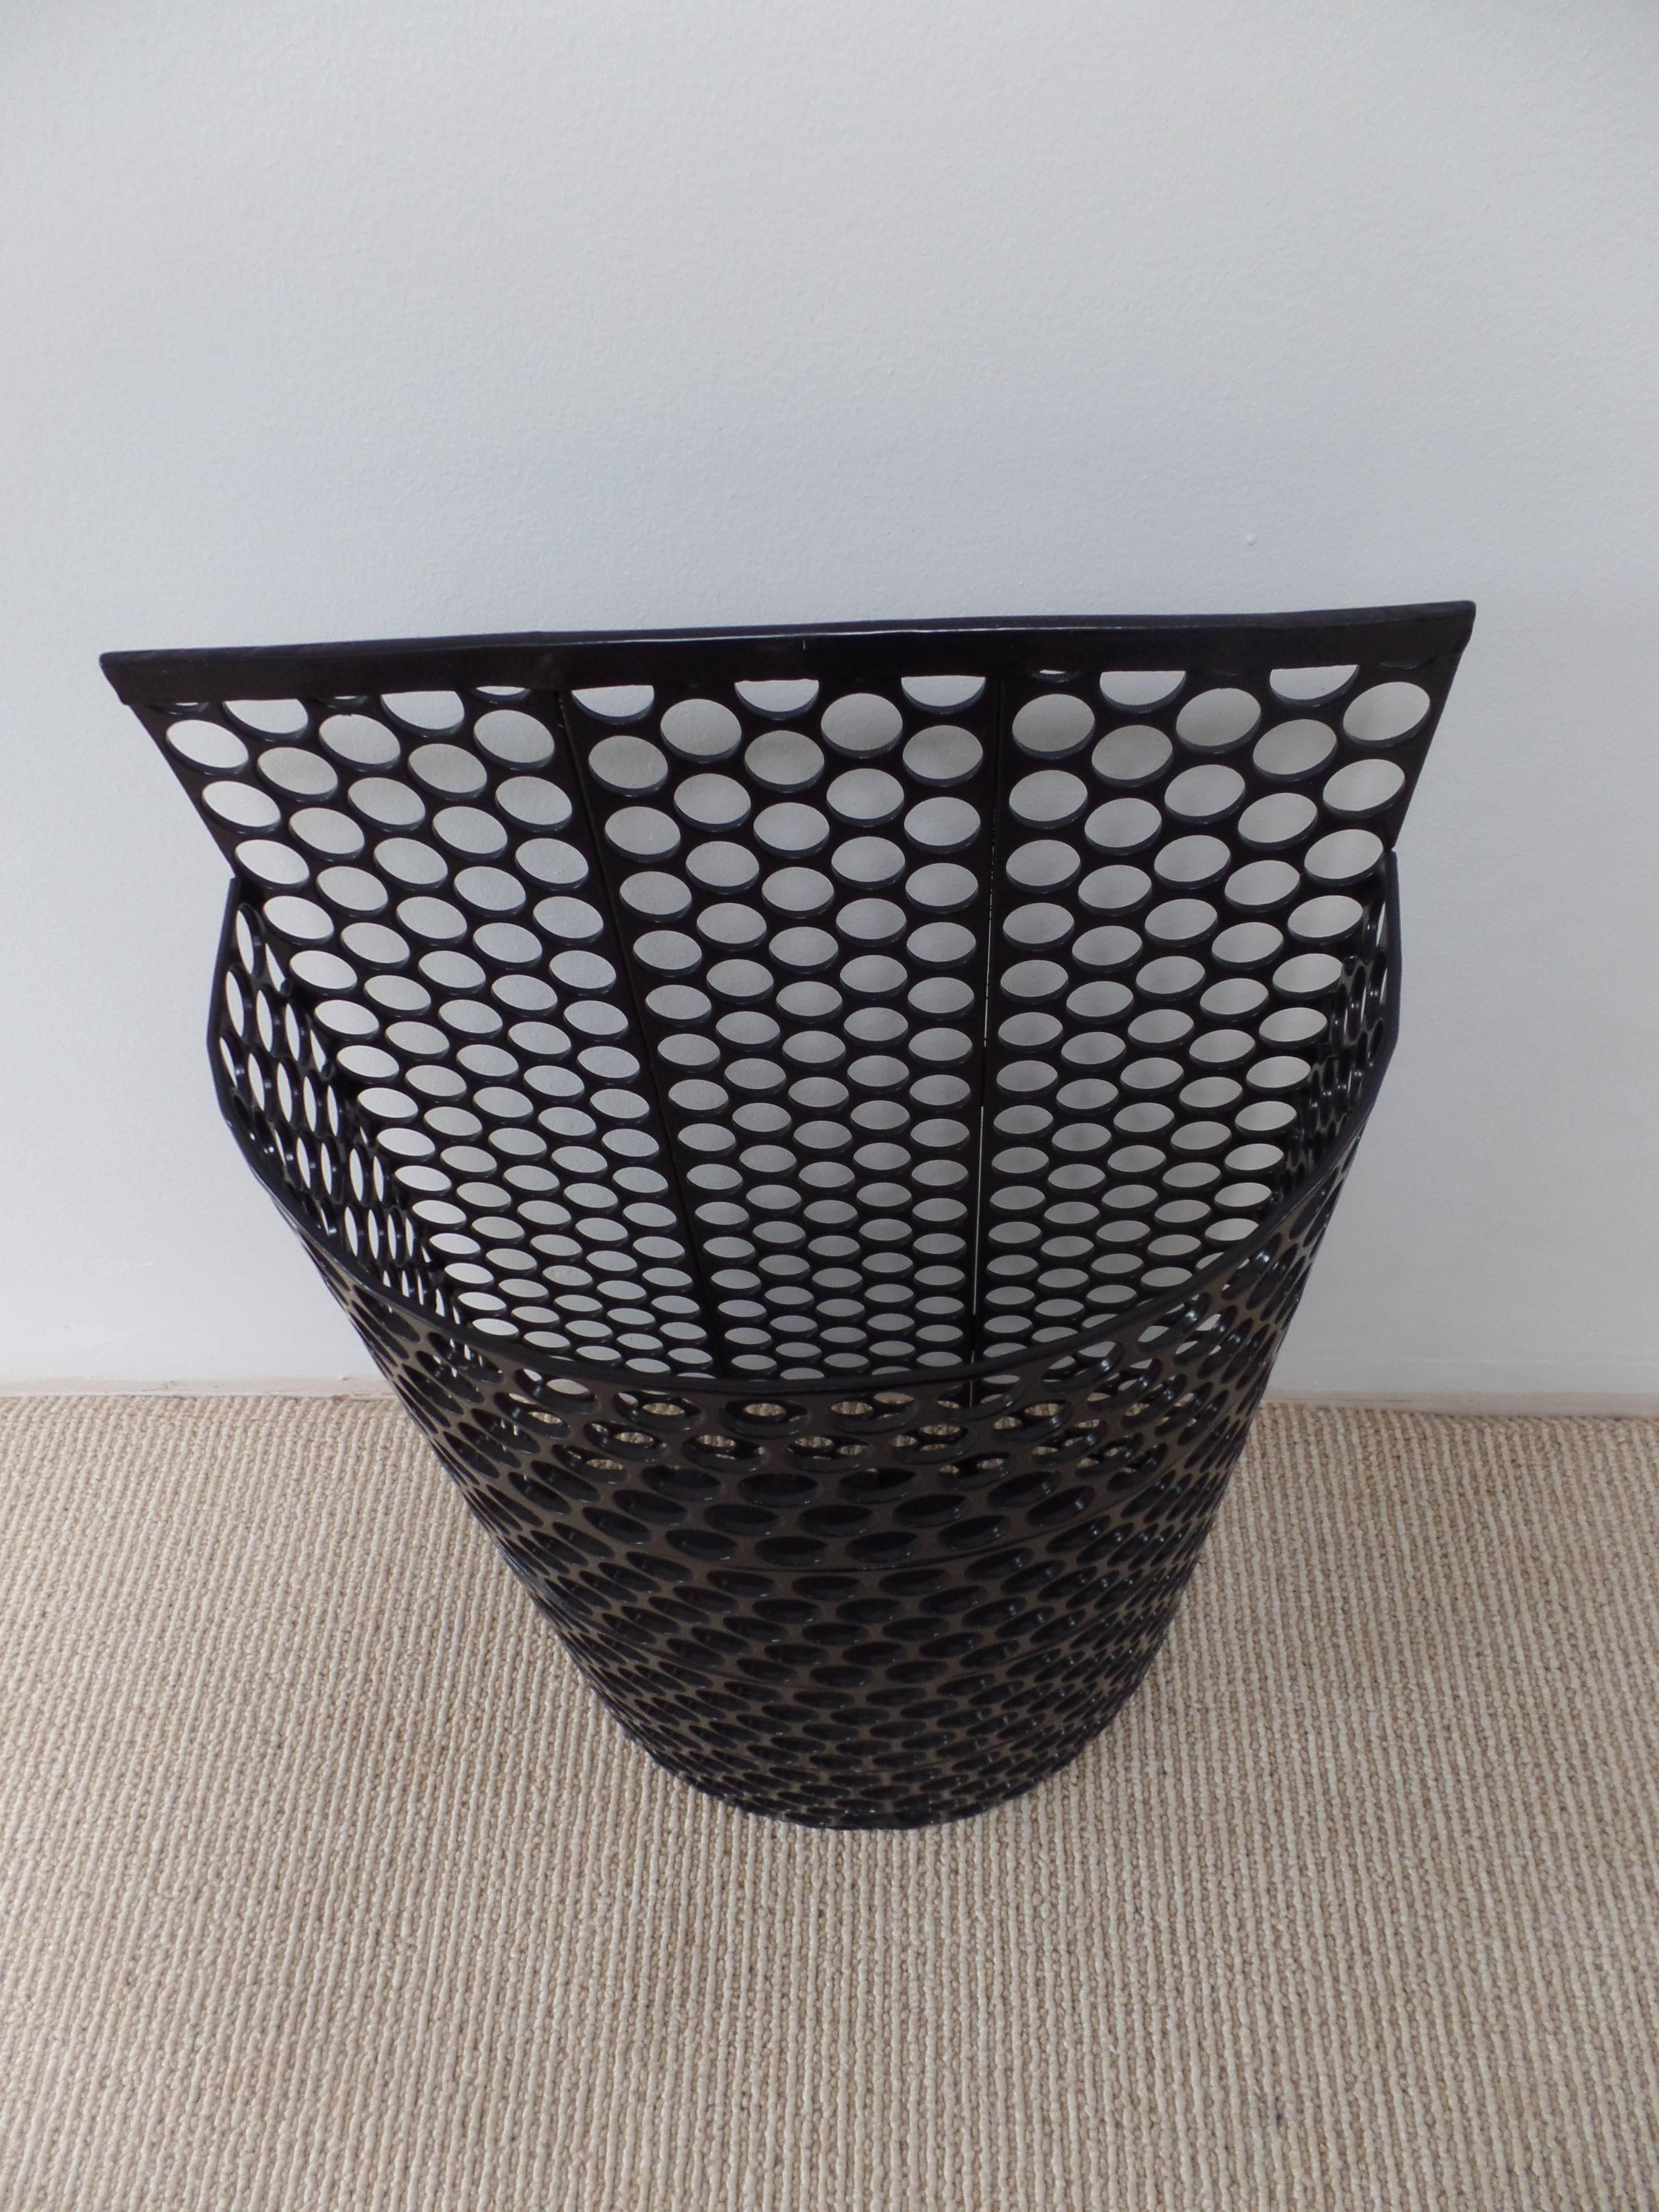 20th Century French Mid-Century Modern Black Enameled Steel Umbrella Stand or Waste Basket